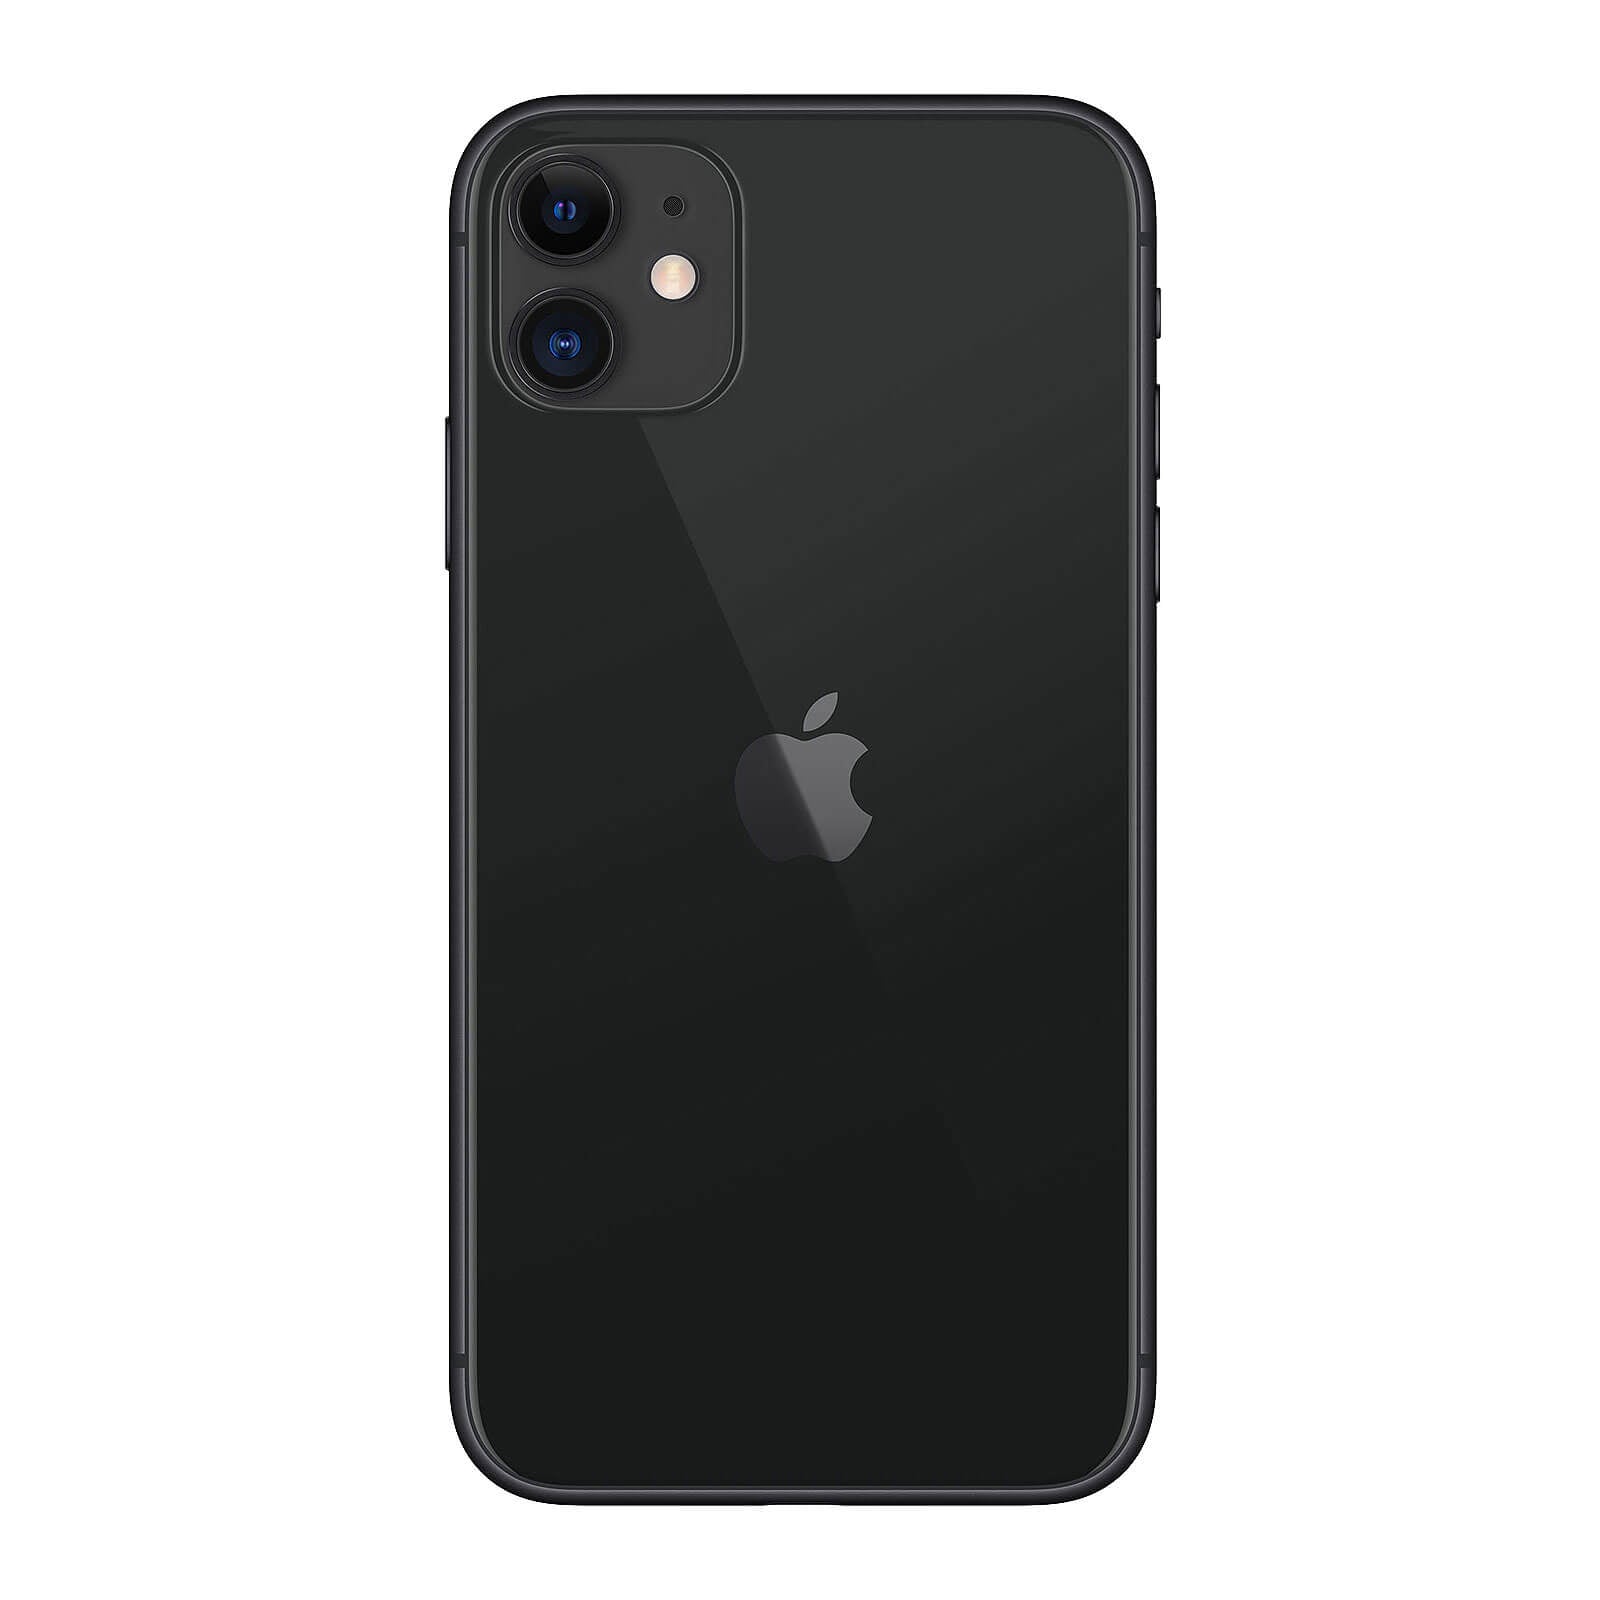 Apple iPhone 11 64GB Black Good - Verizon